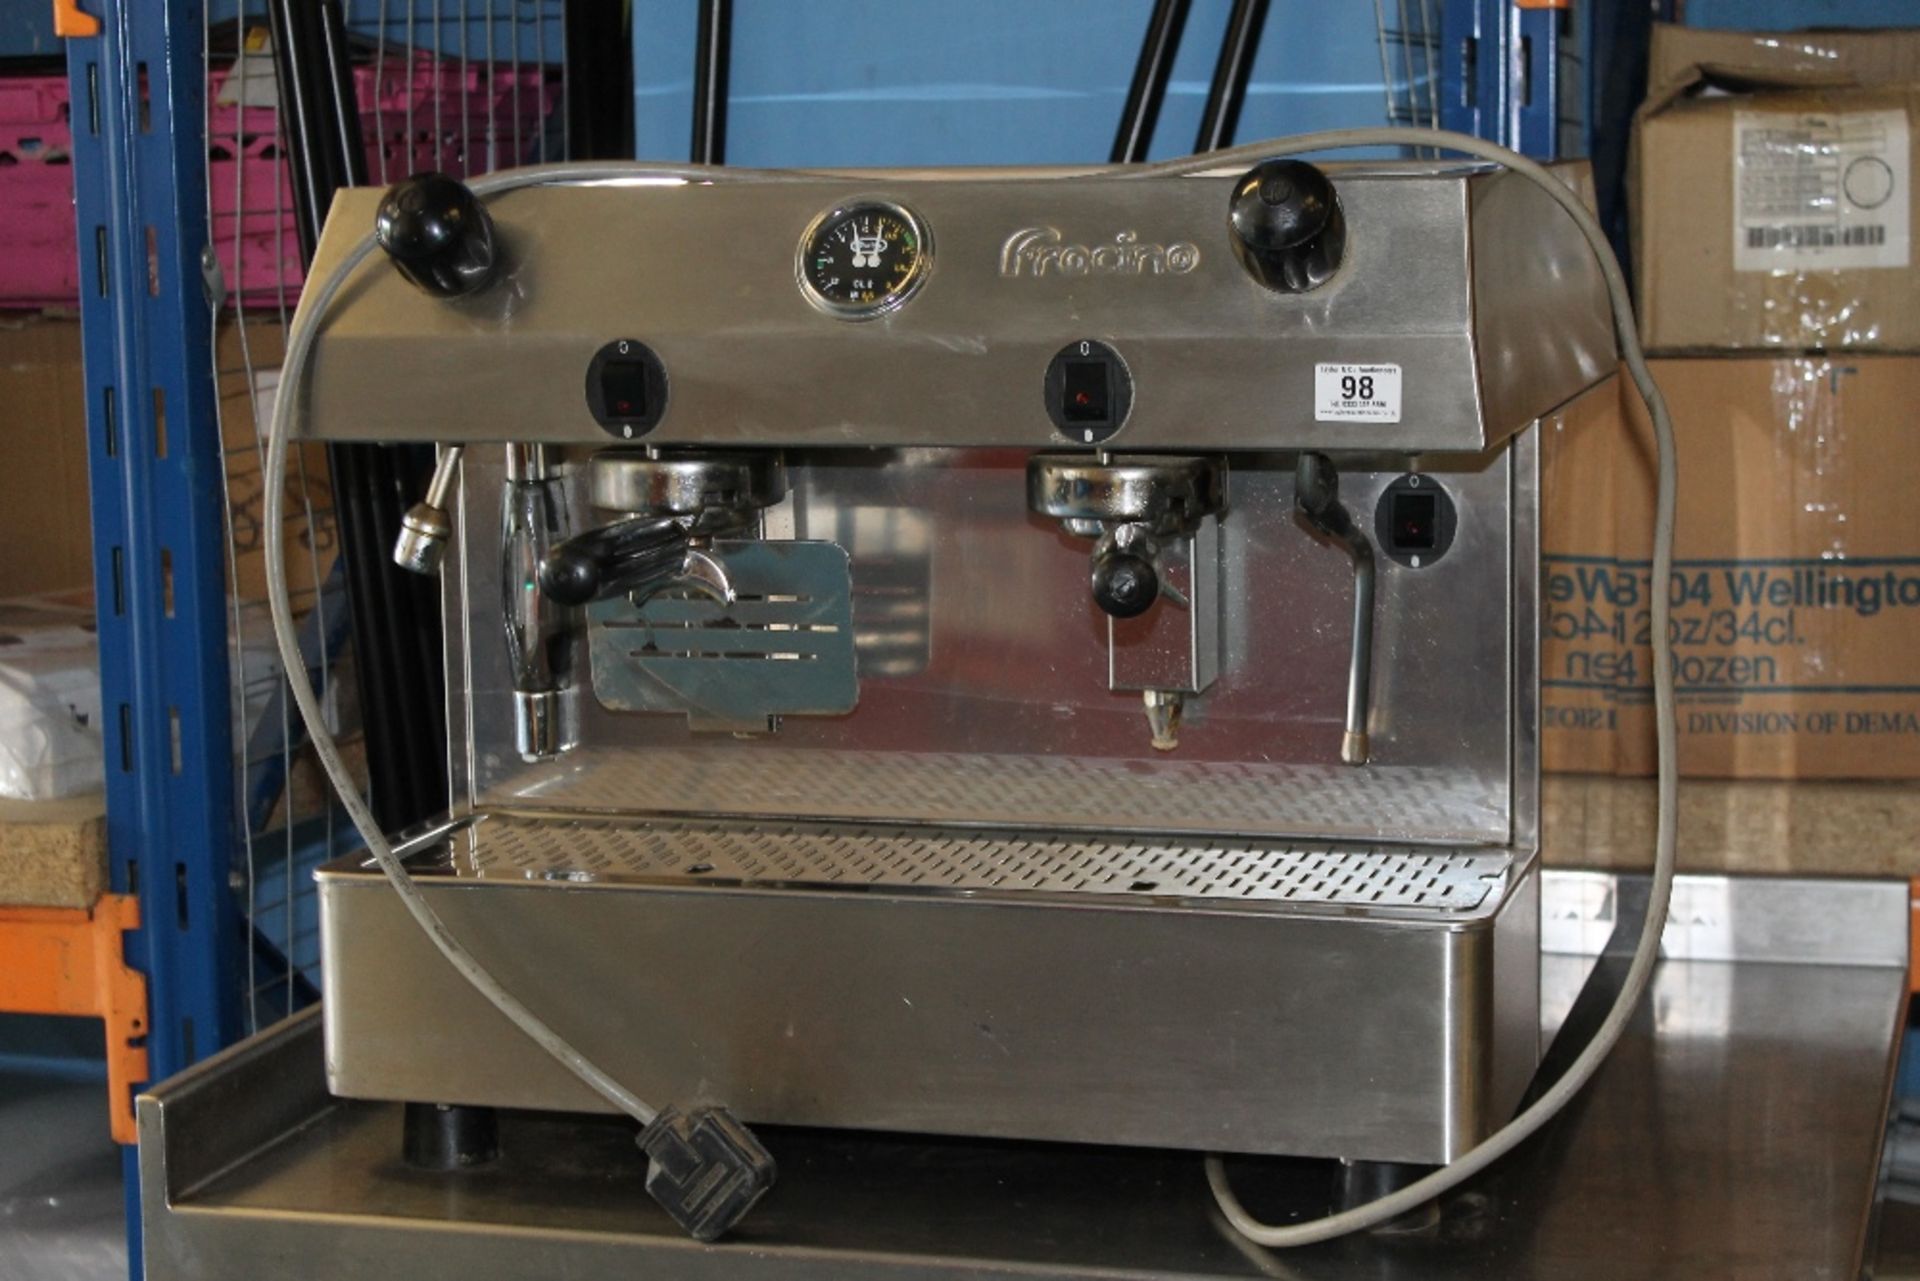 Fracino 2 Group Espresso Coffee Machine – Tested – NO VAT - Image 2 of 3